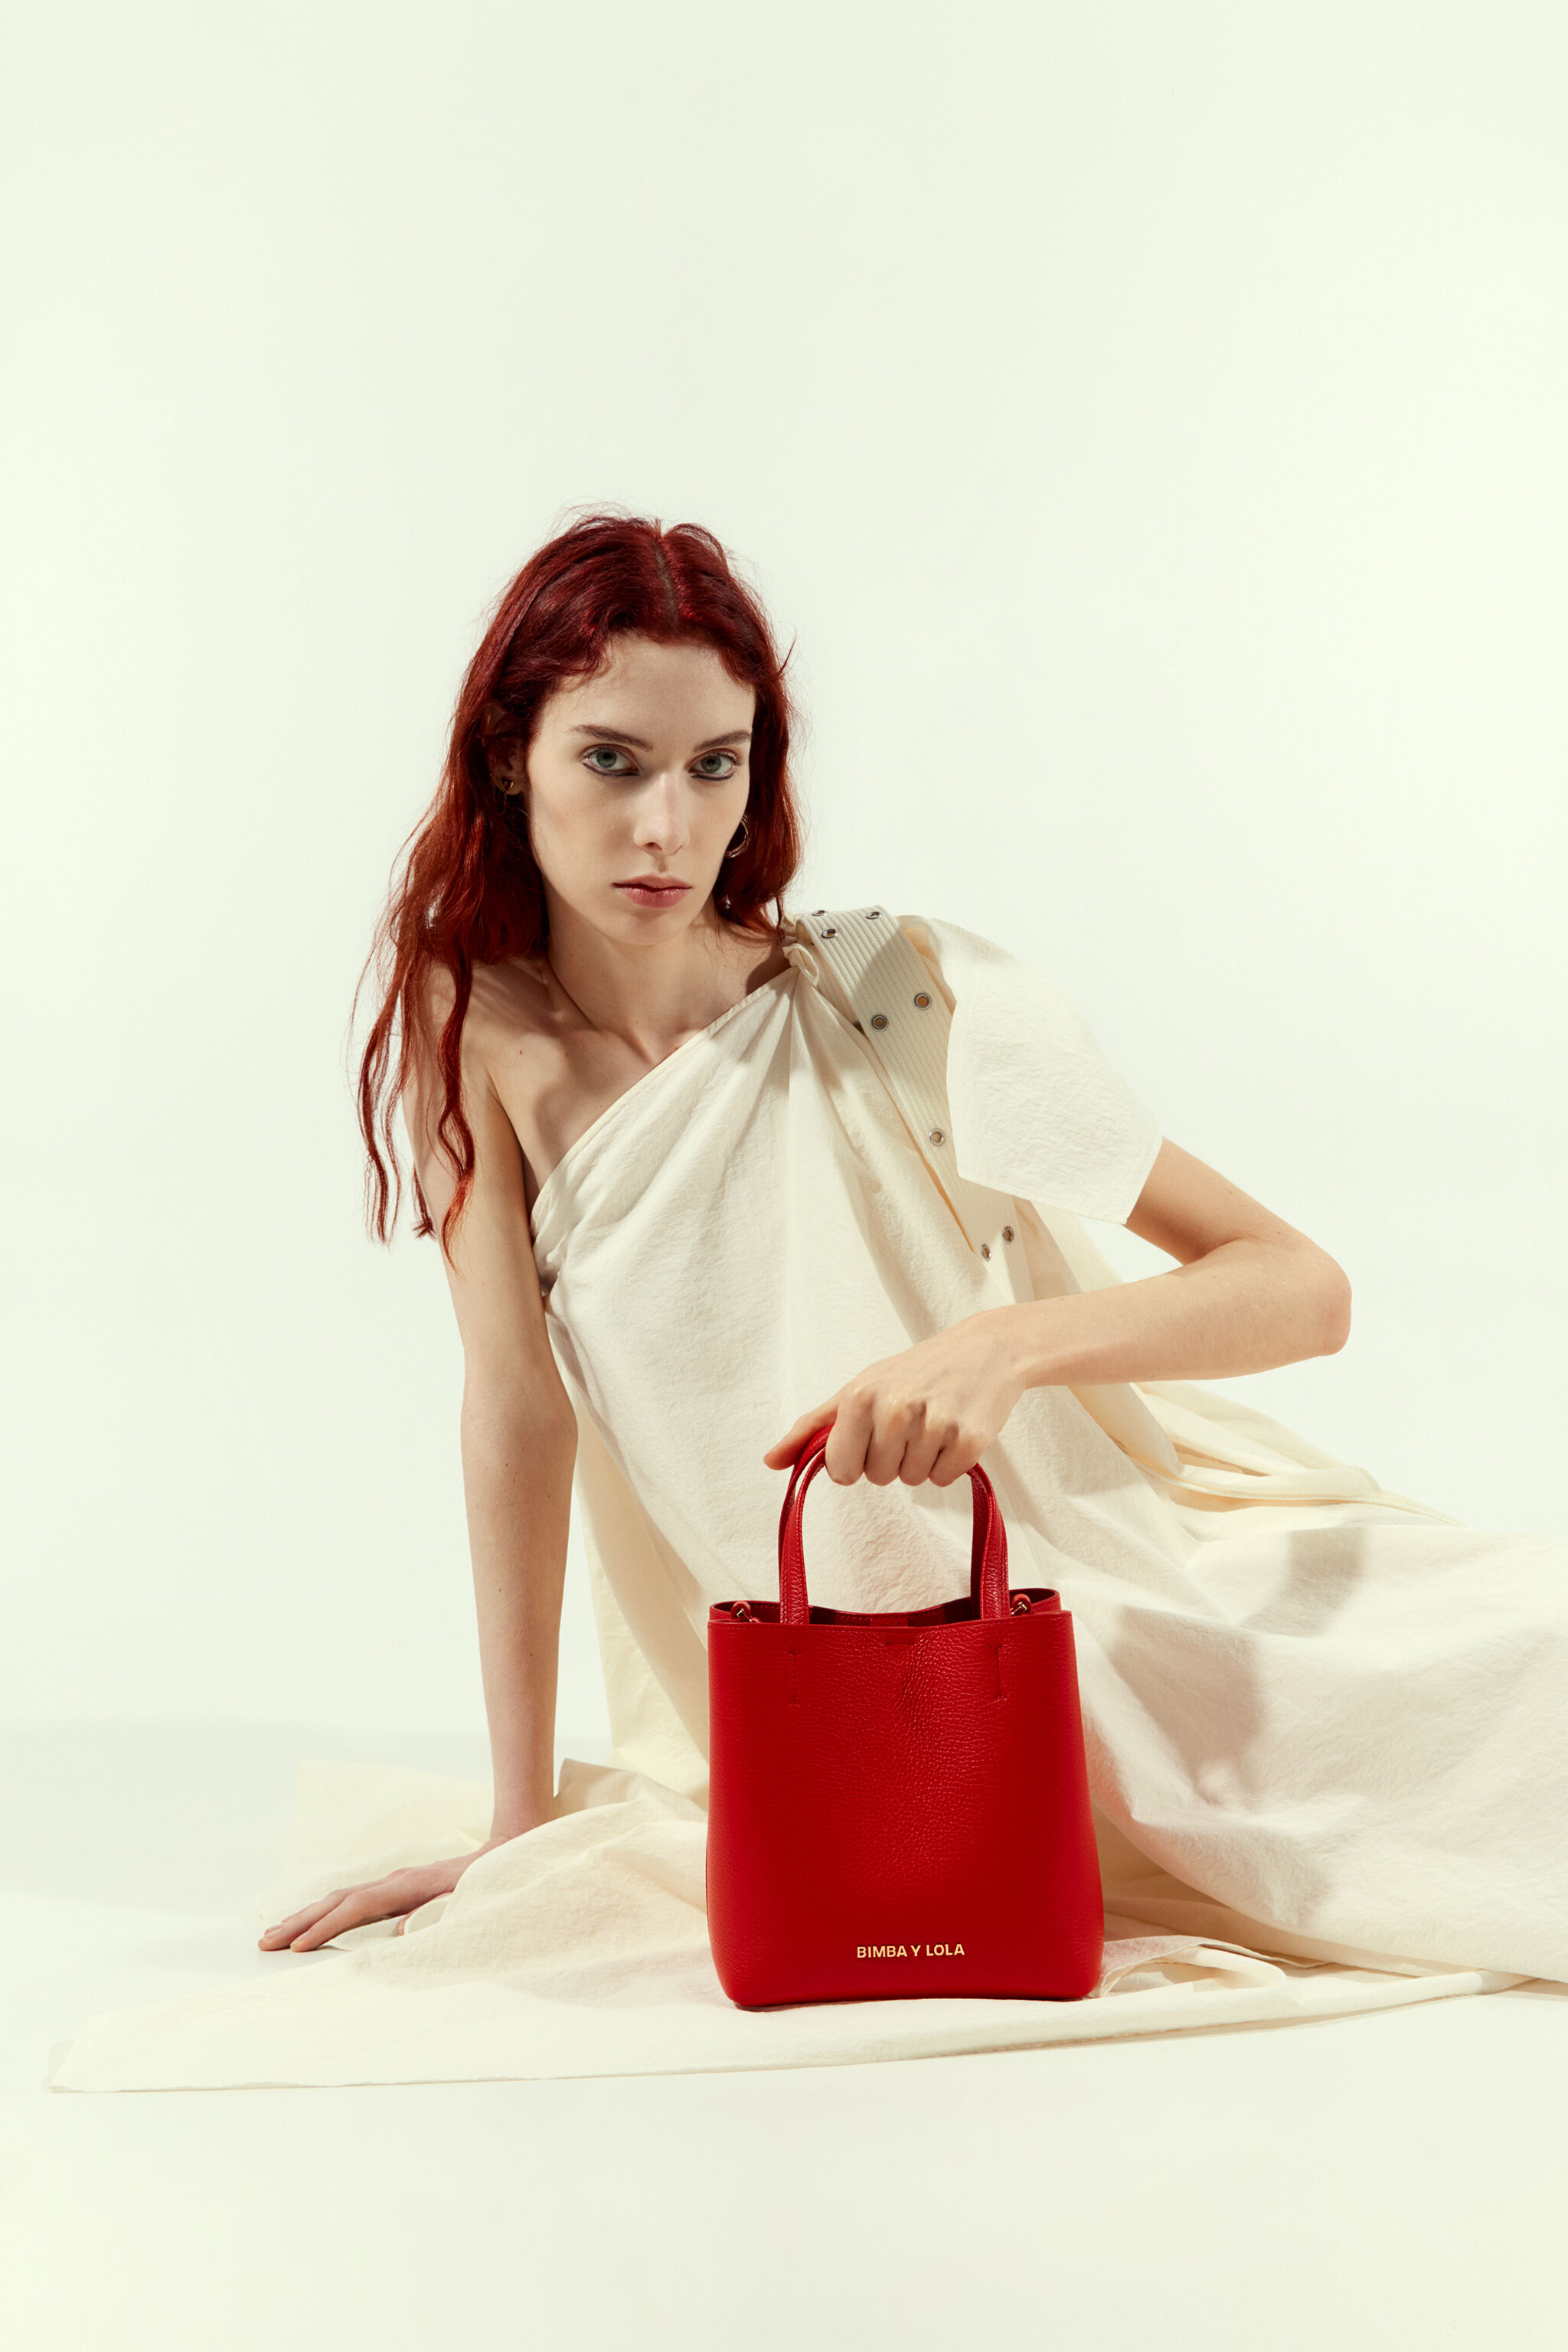 Small Bimba Y Lola Bags & Handbags for Women for sale | eBay